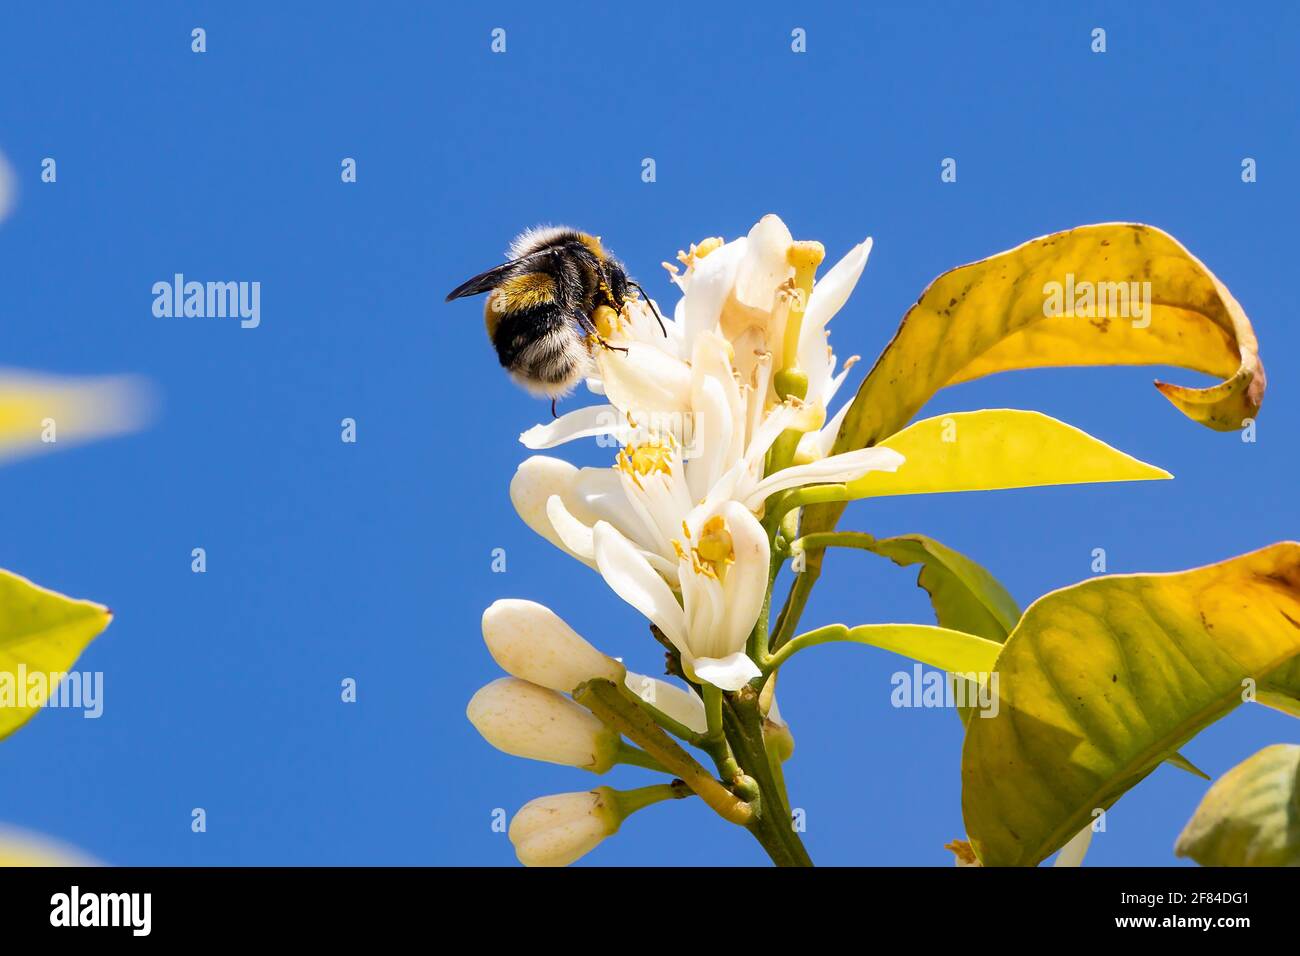 Buff-tailed Bumblebee, Bombus terrestris, sucking nectar on orange blossom, Citrus sinensis Stock Photo